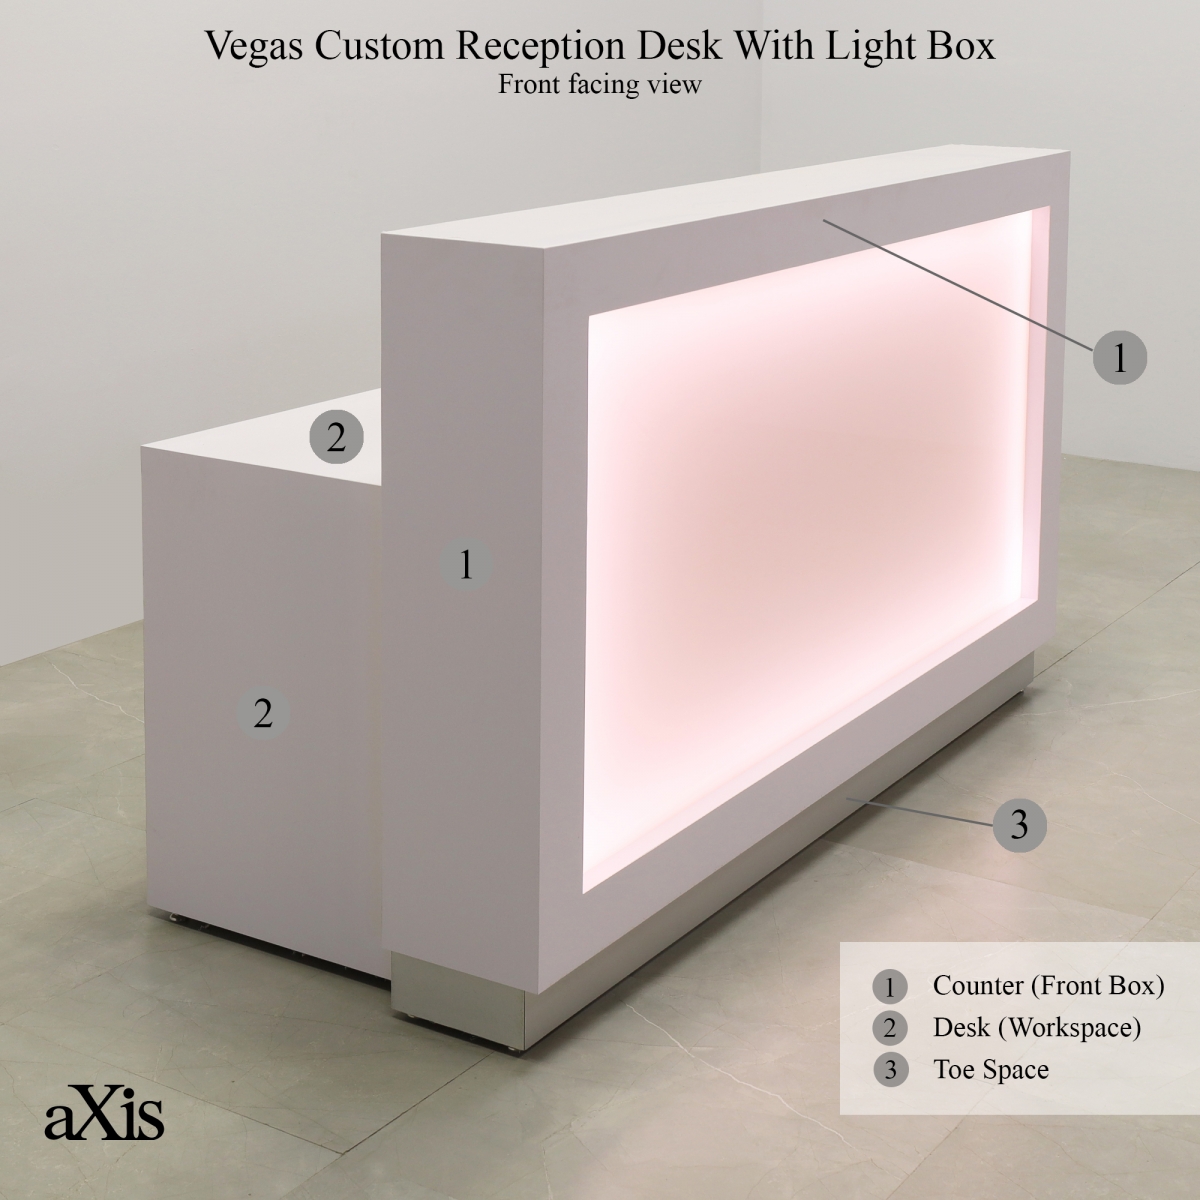 Vegas Custom Reception Desk with Light Box